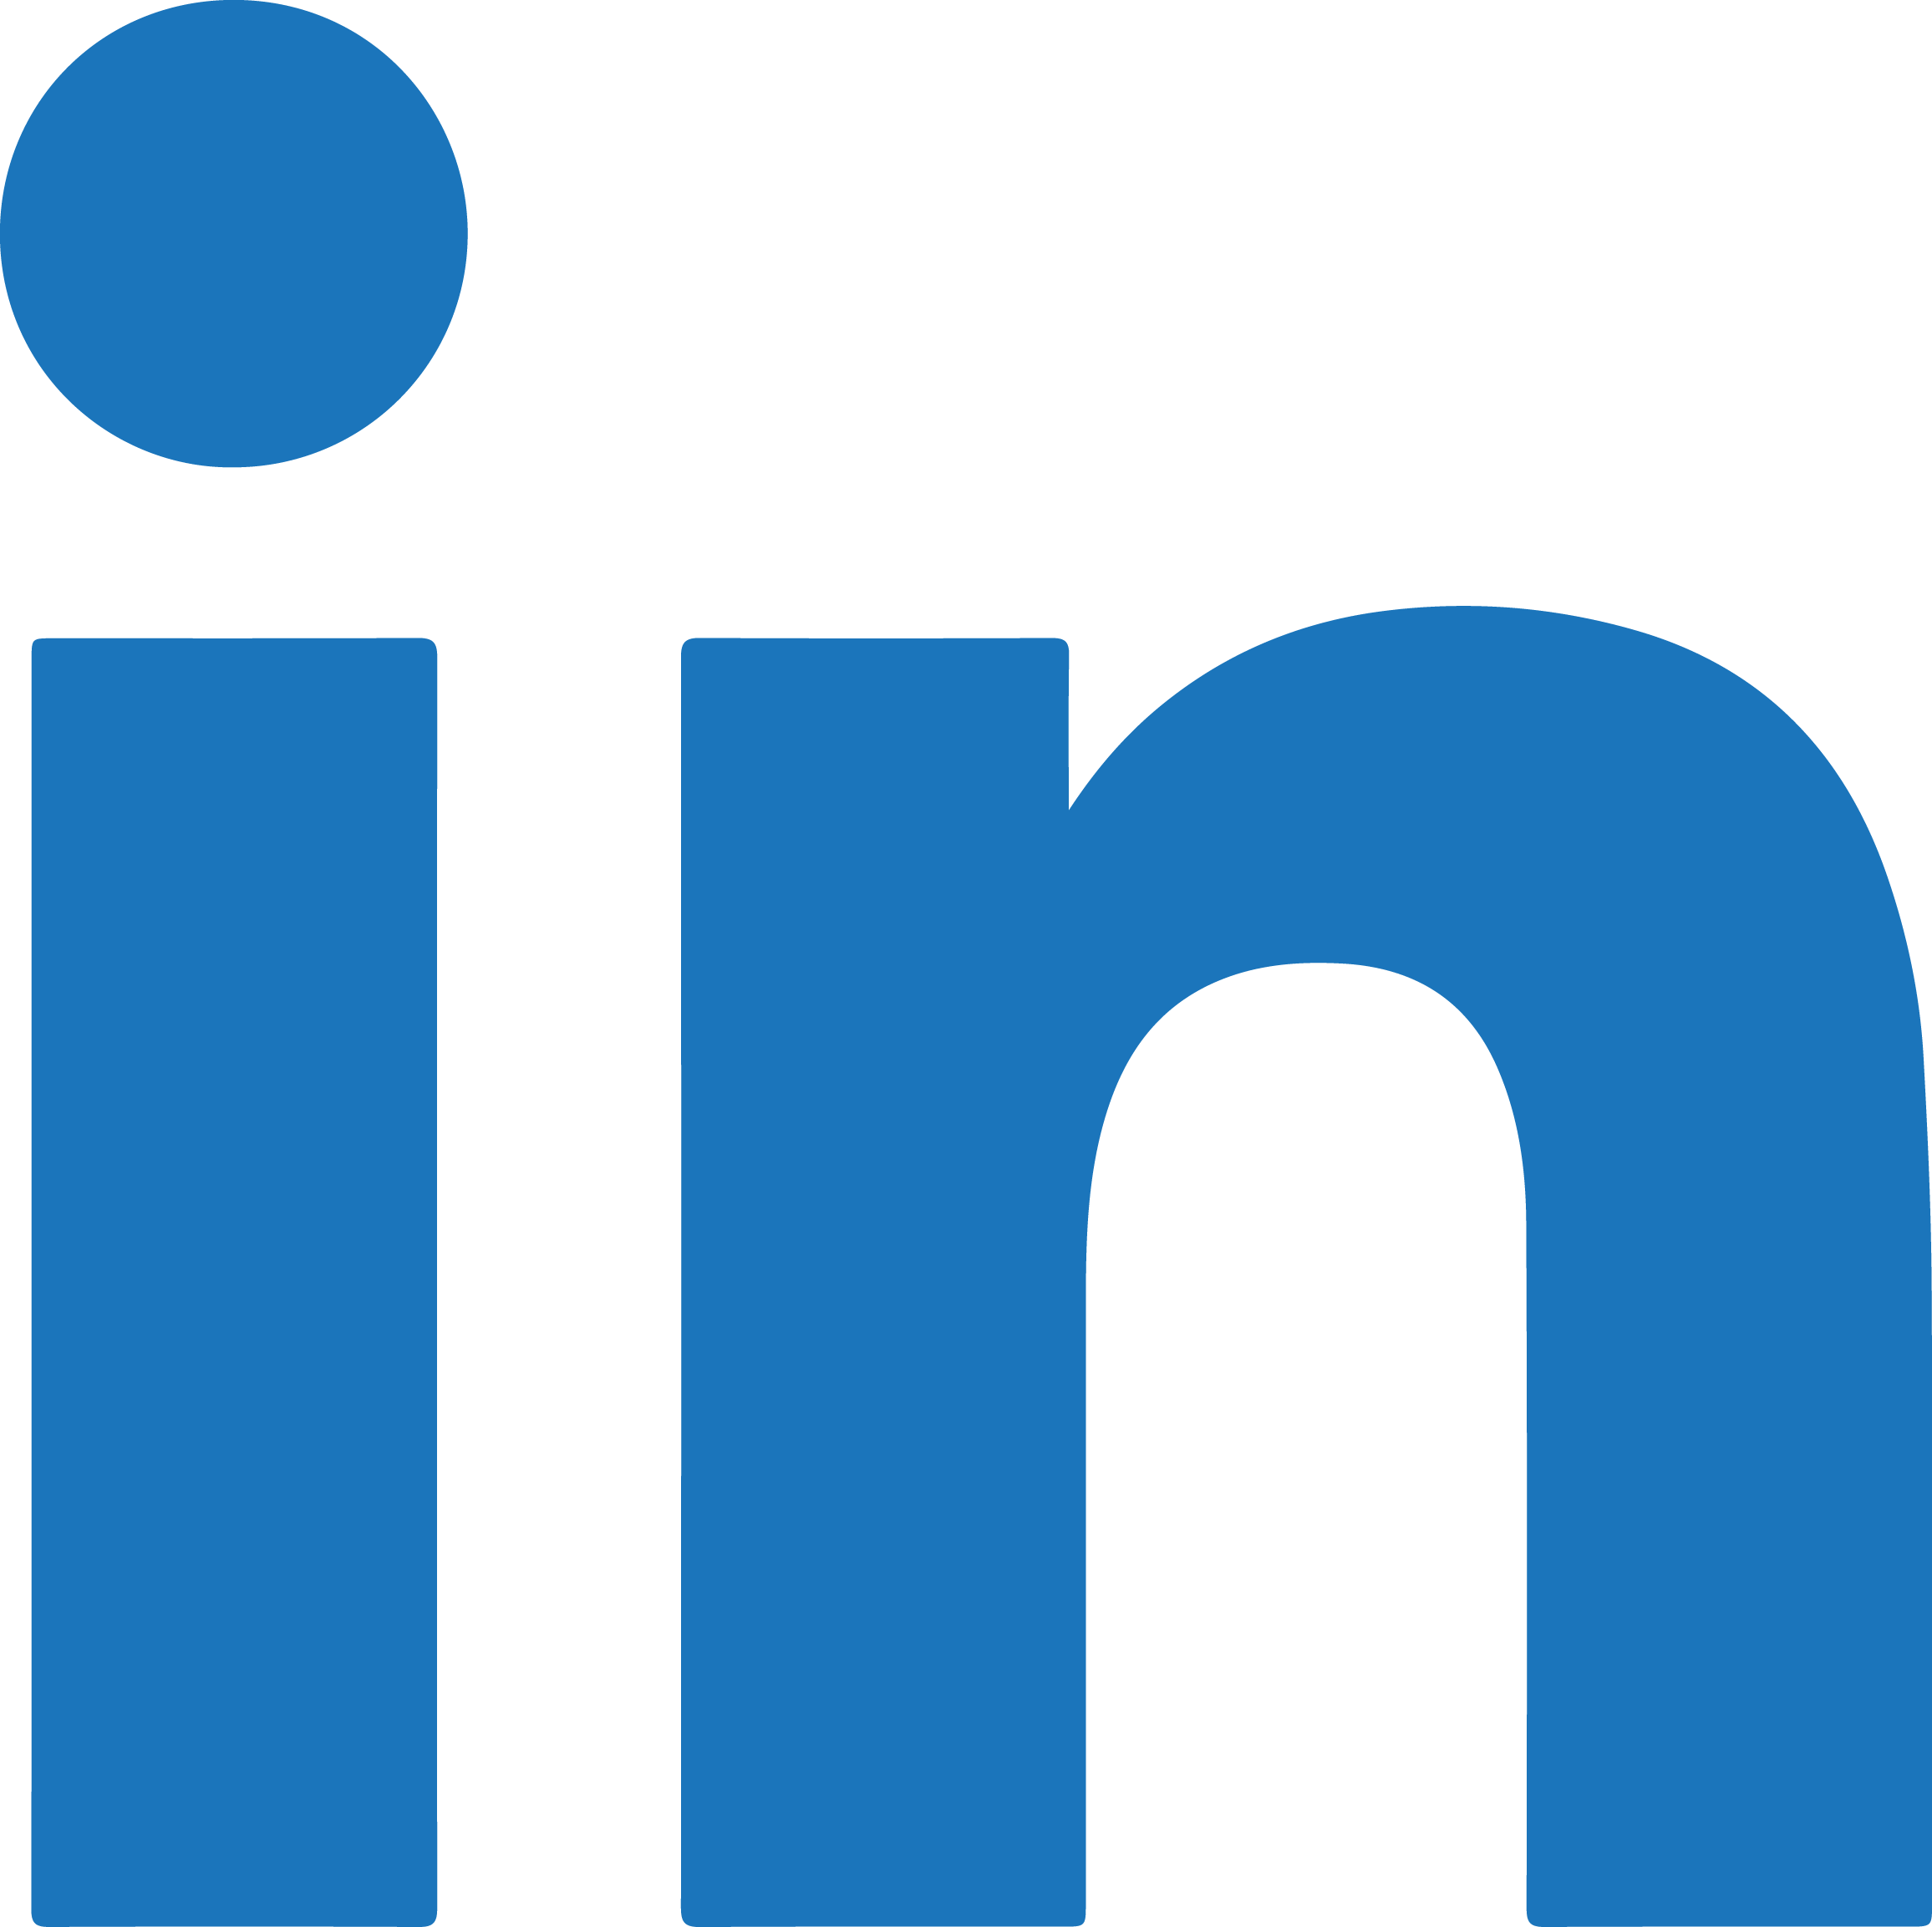 Linkd in Logo - Facebook And Linkedin Vector Logo Png Image